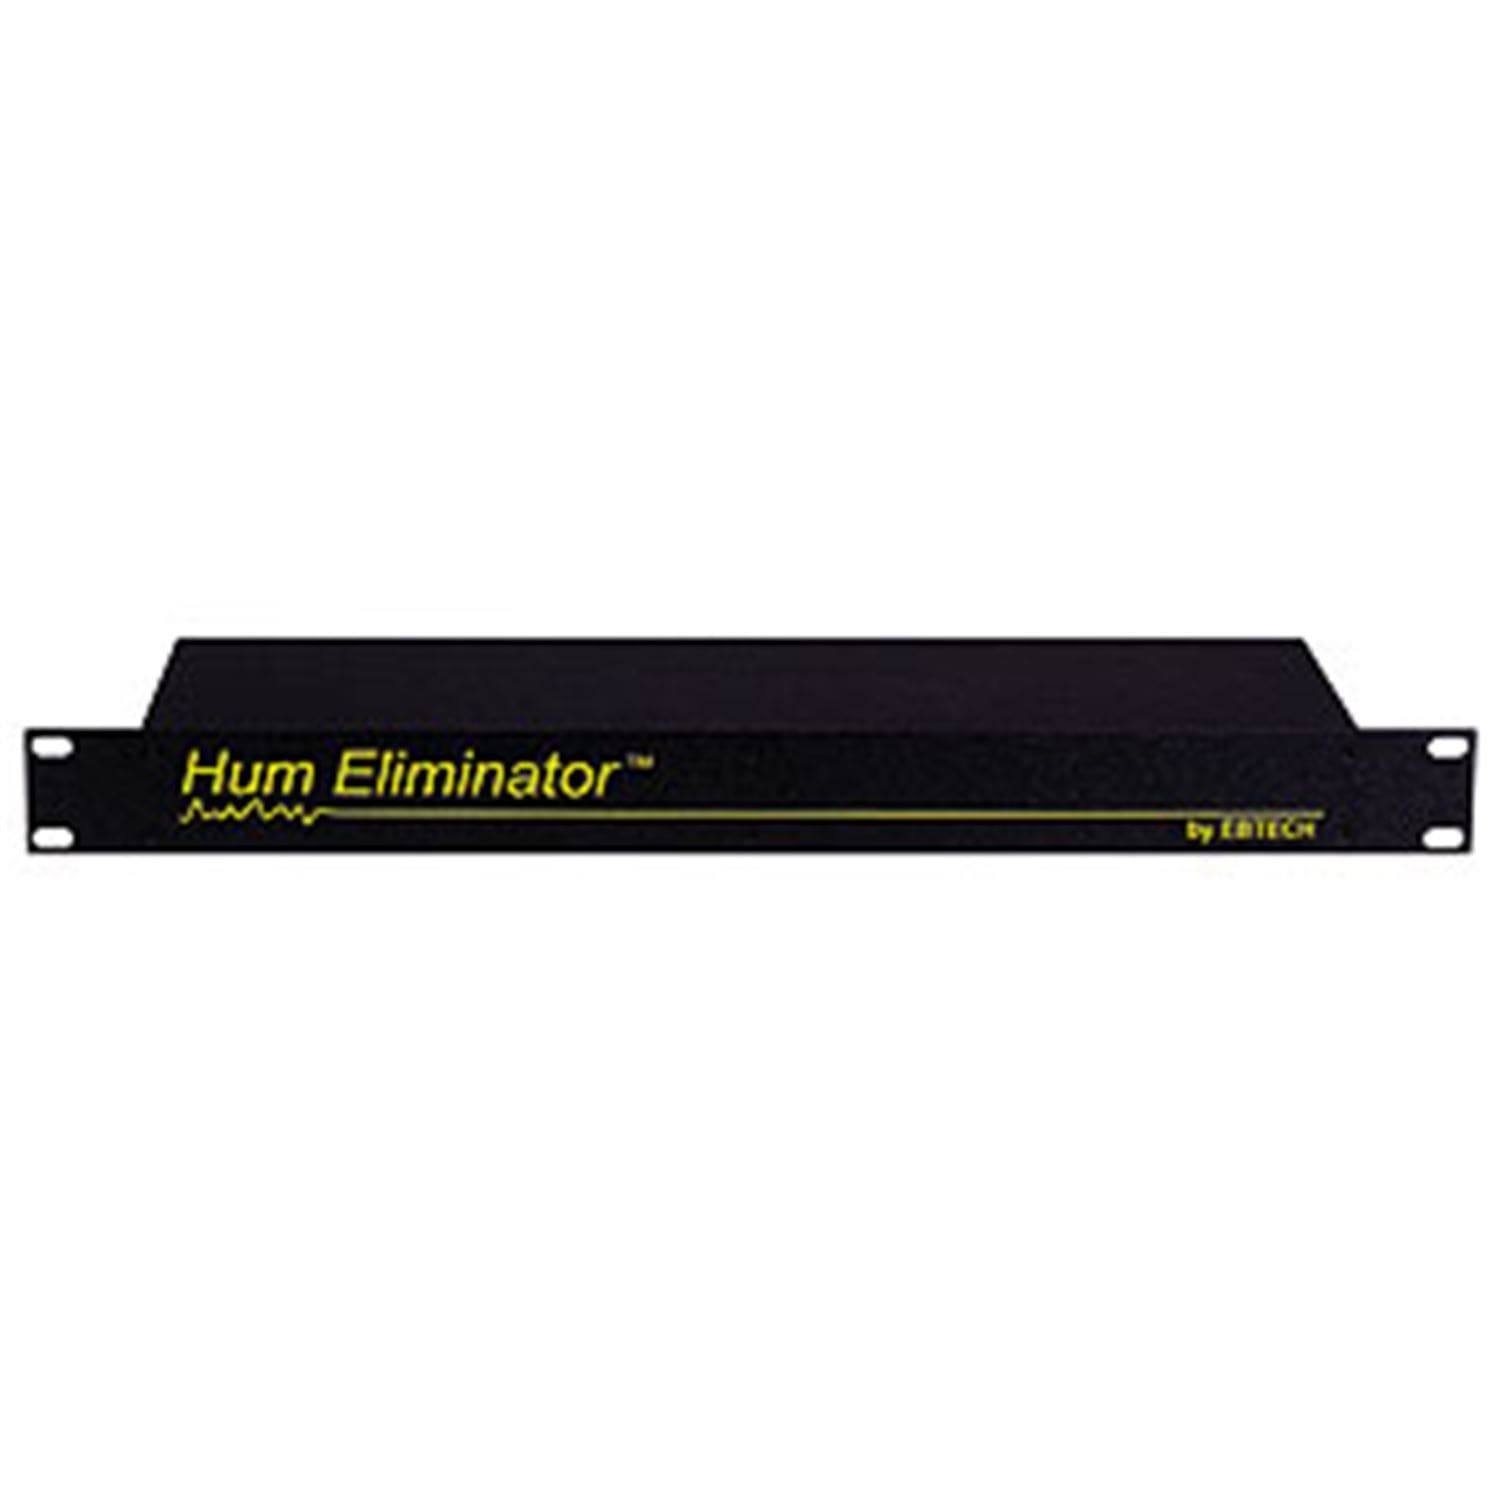 Ebtech 8 Channel Hum Eliminator-Single Rack Space